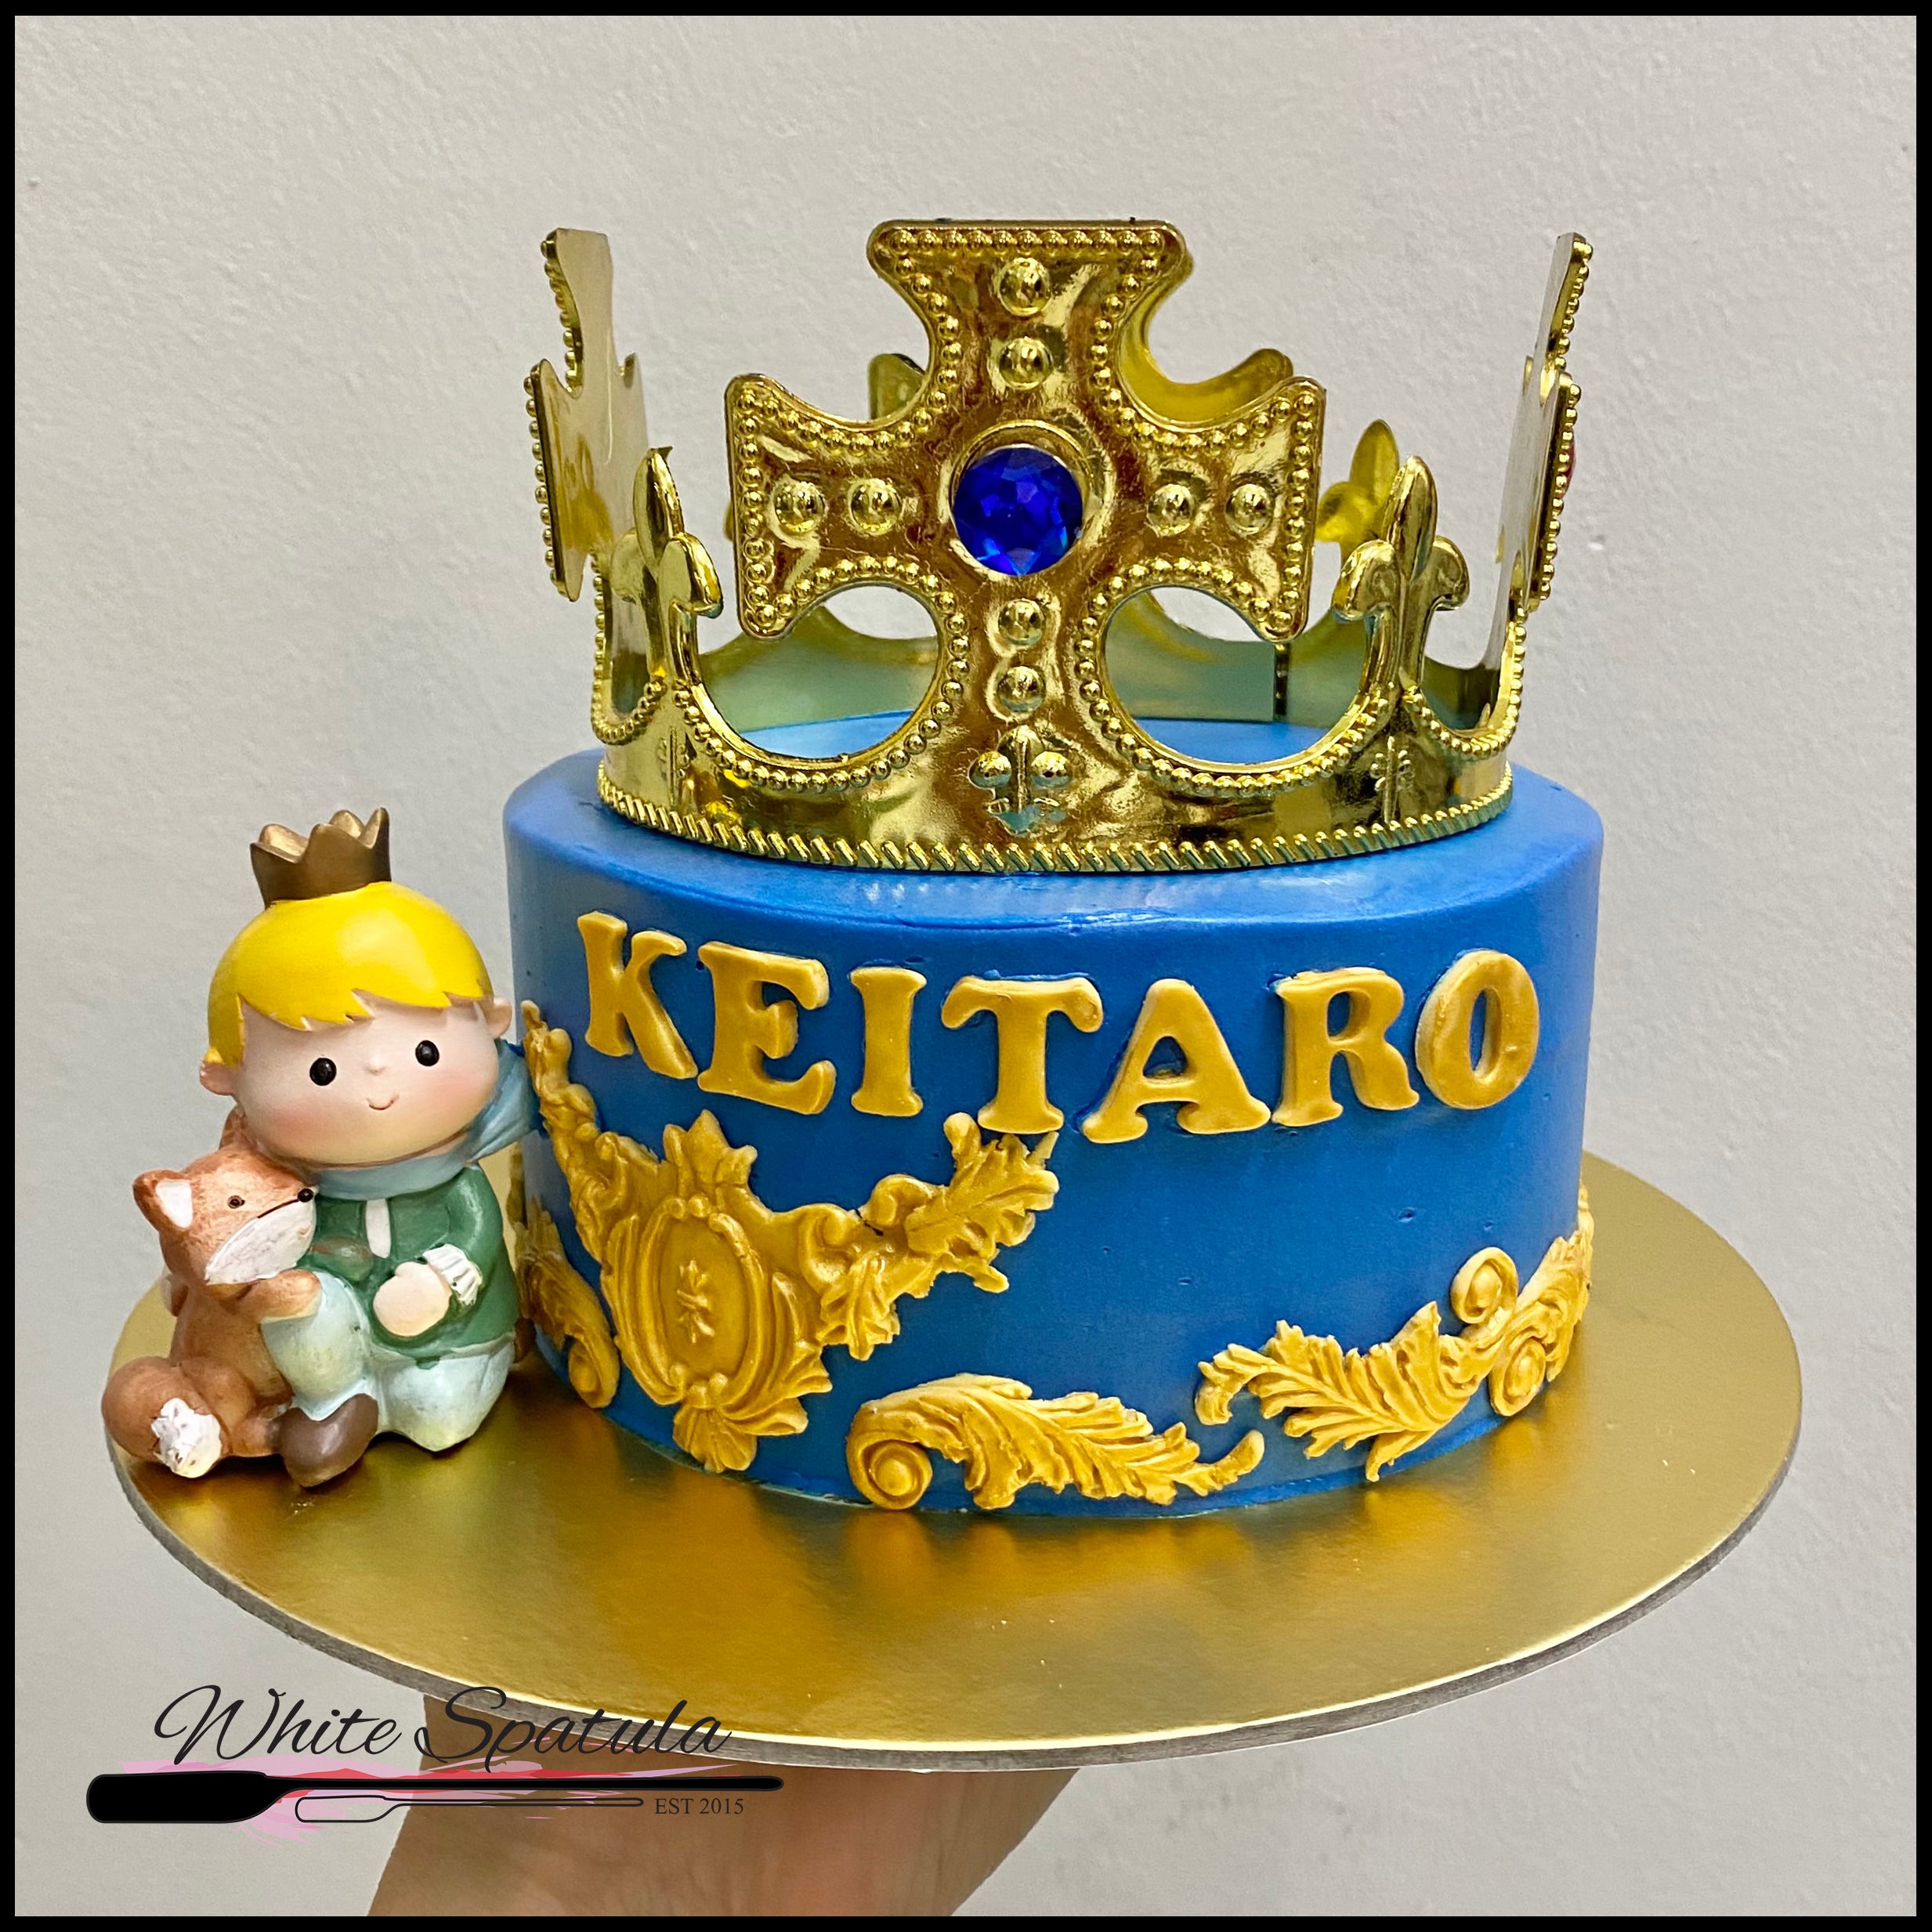 Prince birthday cake decoration /royal cake /detailed video - YouTube